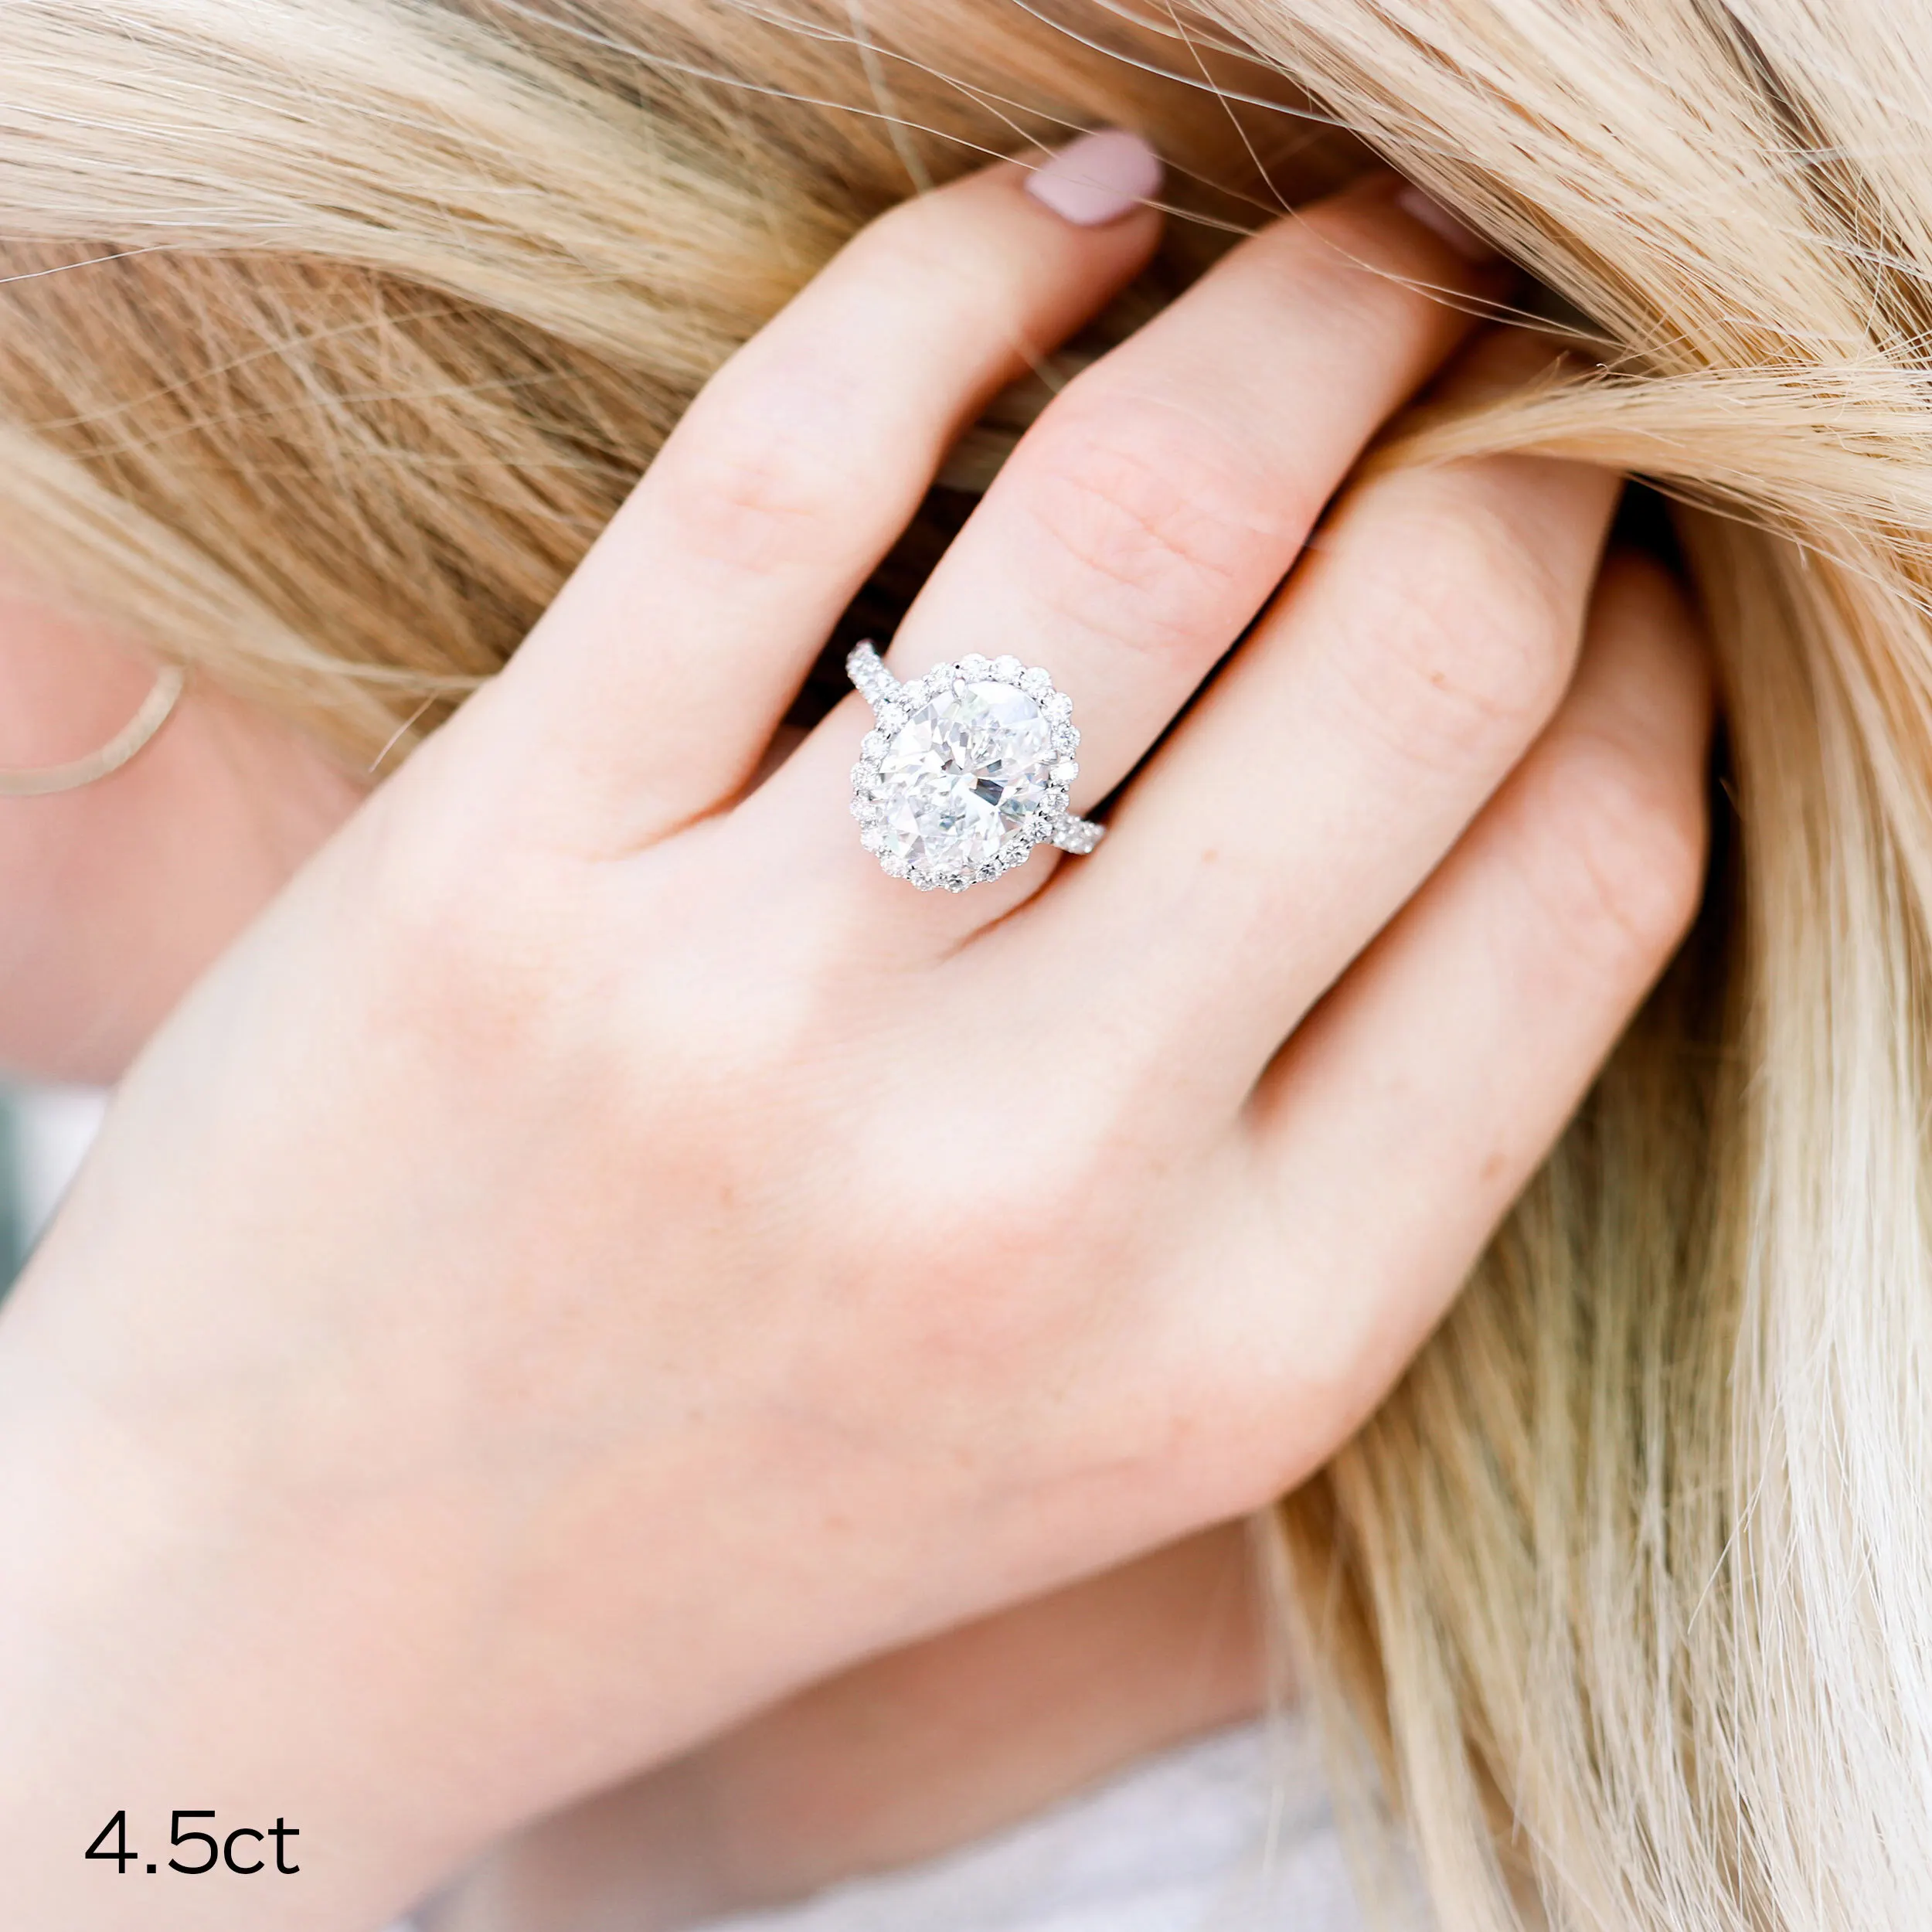 5 Carat Oval Lab Created Diamond Ring with Halo and Split Shank Diamond Band Ada Diamonds Design Ad-161 on Model